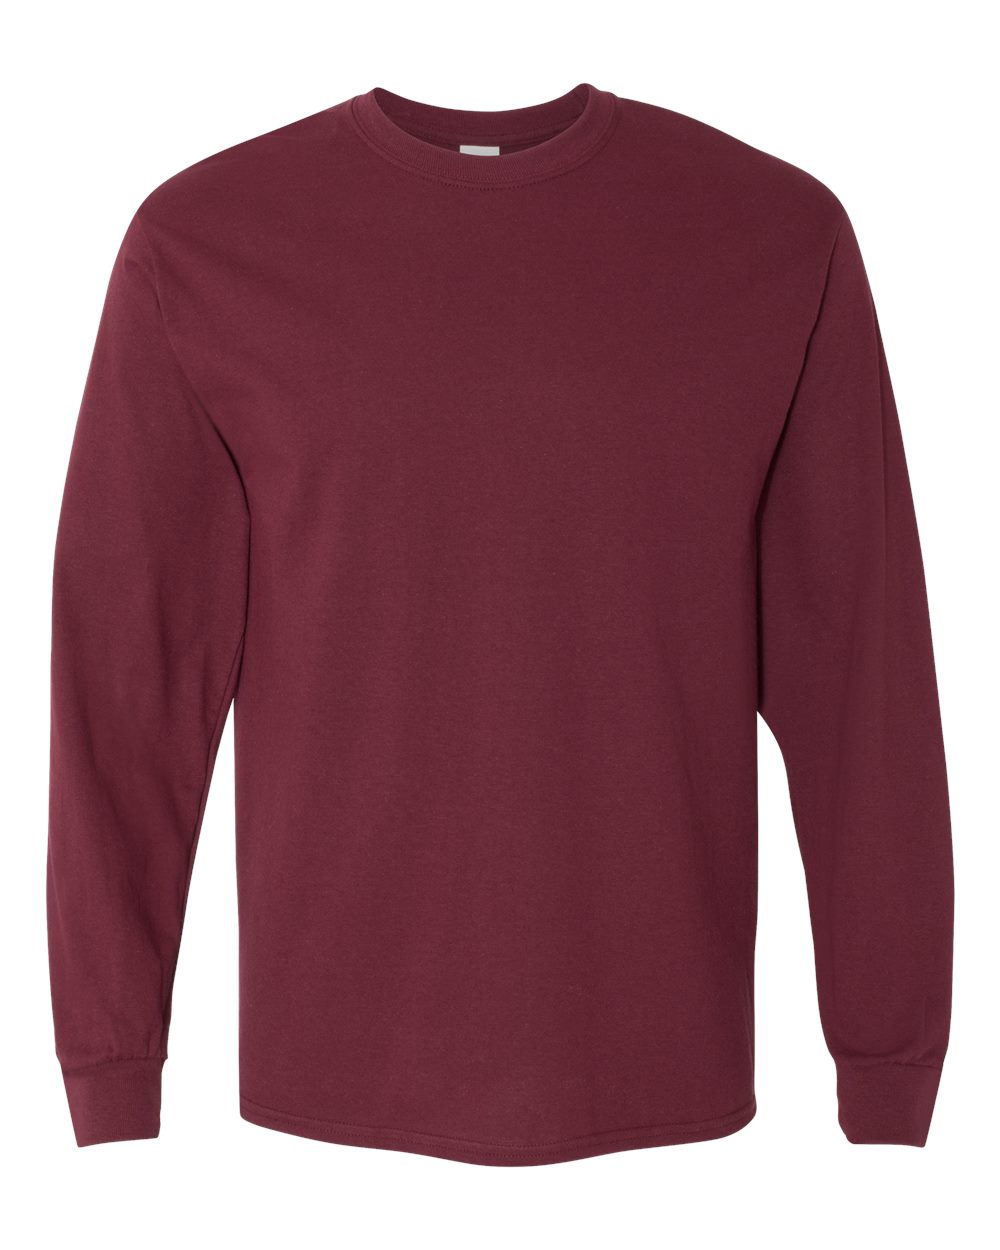 Pretreated Gildan 5400 Heavy Cotton Long Sleeve T-Shirt - Maroon